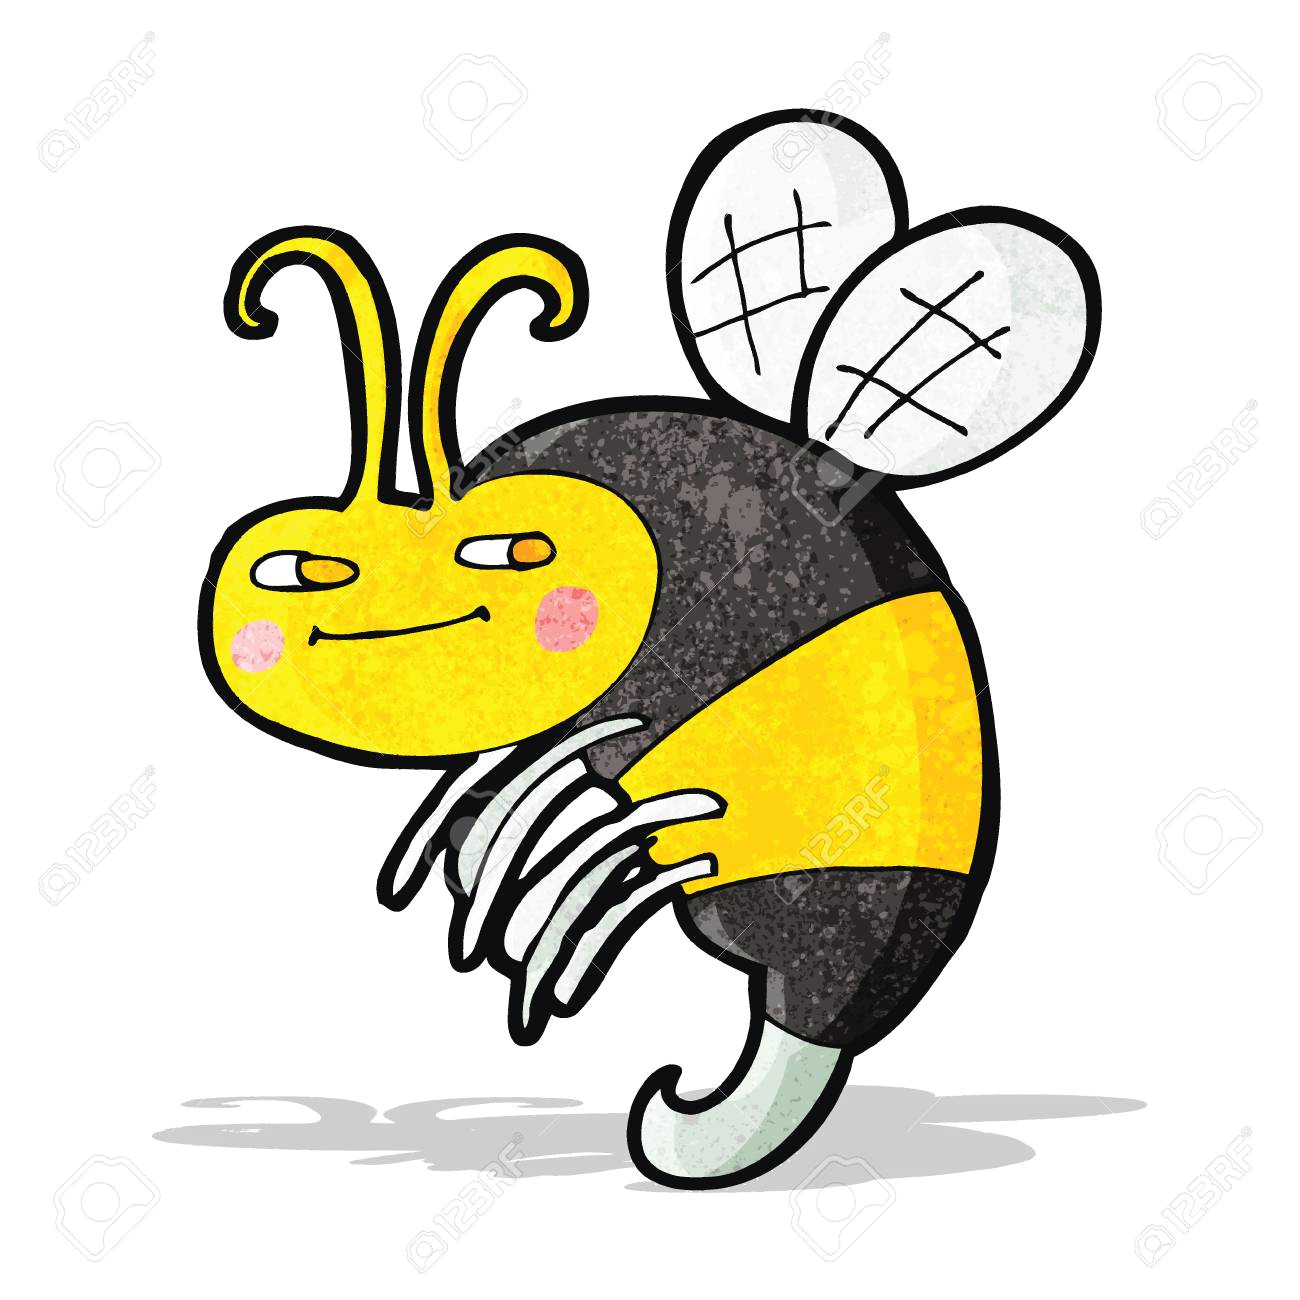 Drawing A Cartoon Bee Cartoon Bee Royalty Free Cliparts Vectors and Stock Illustration